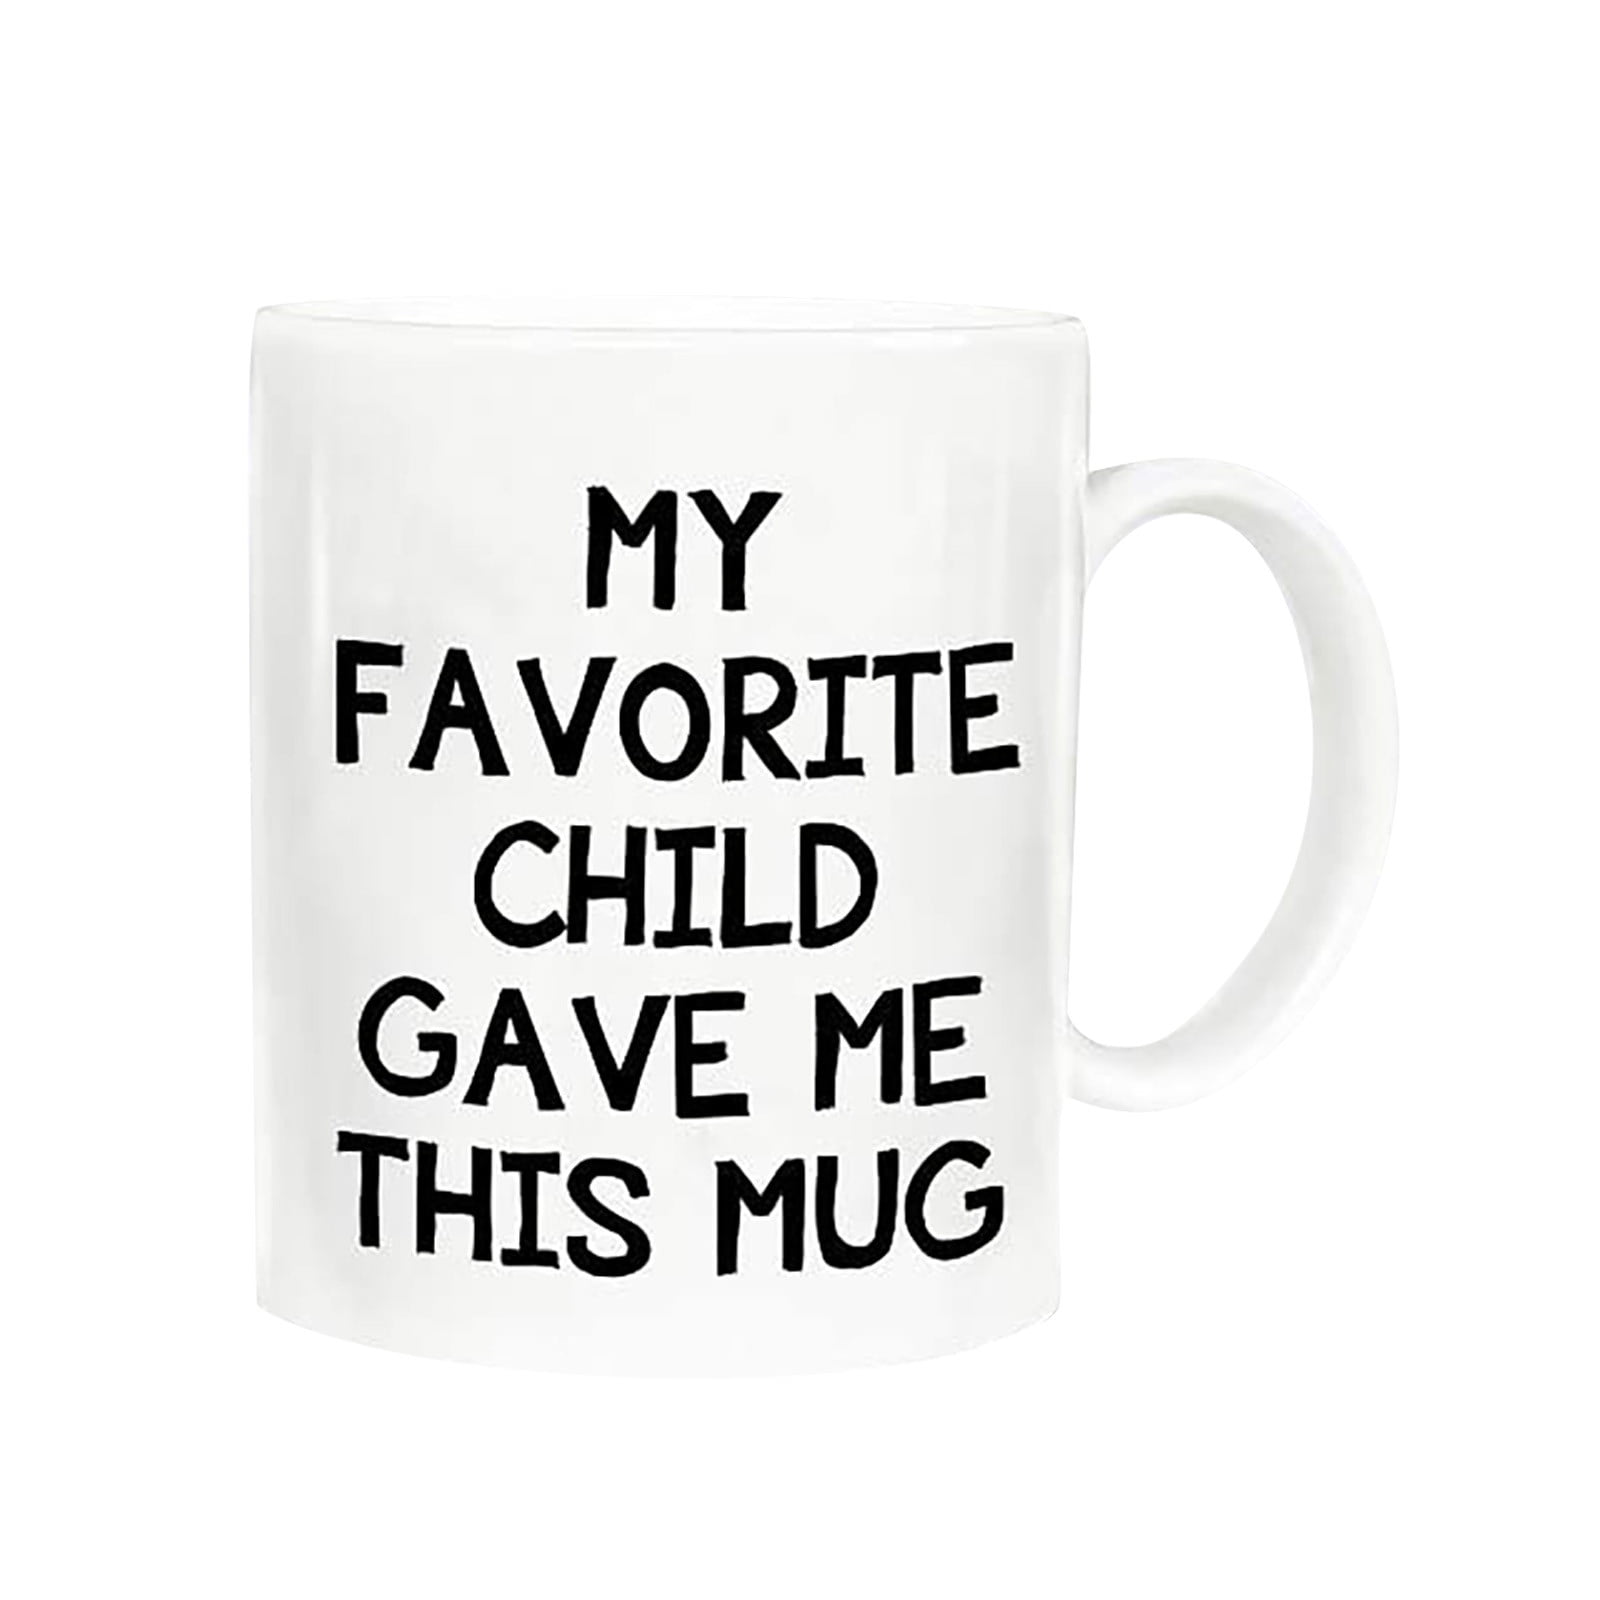 1PC Cartoon Mickey Minnie Ceramic Coffee Milk Tea Mug Cup Great Gift Birthday 